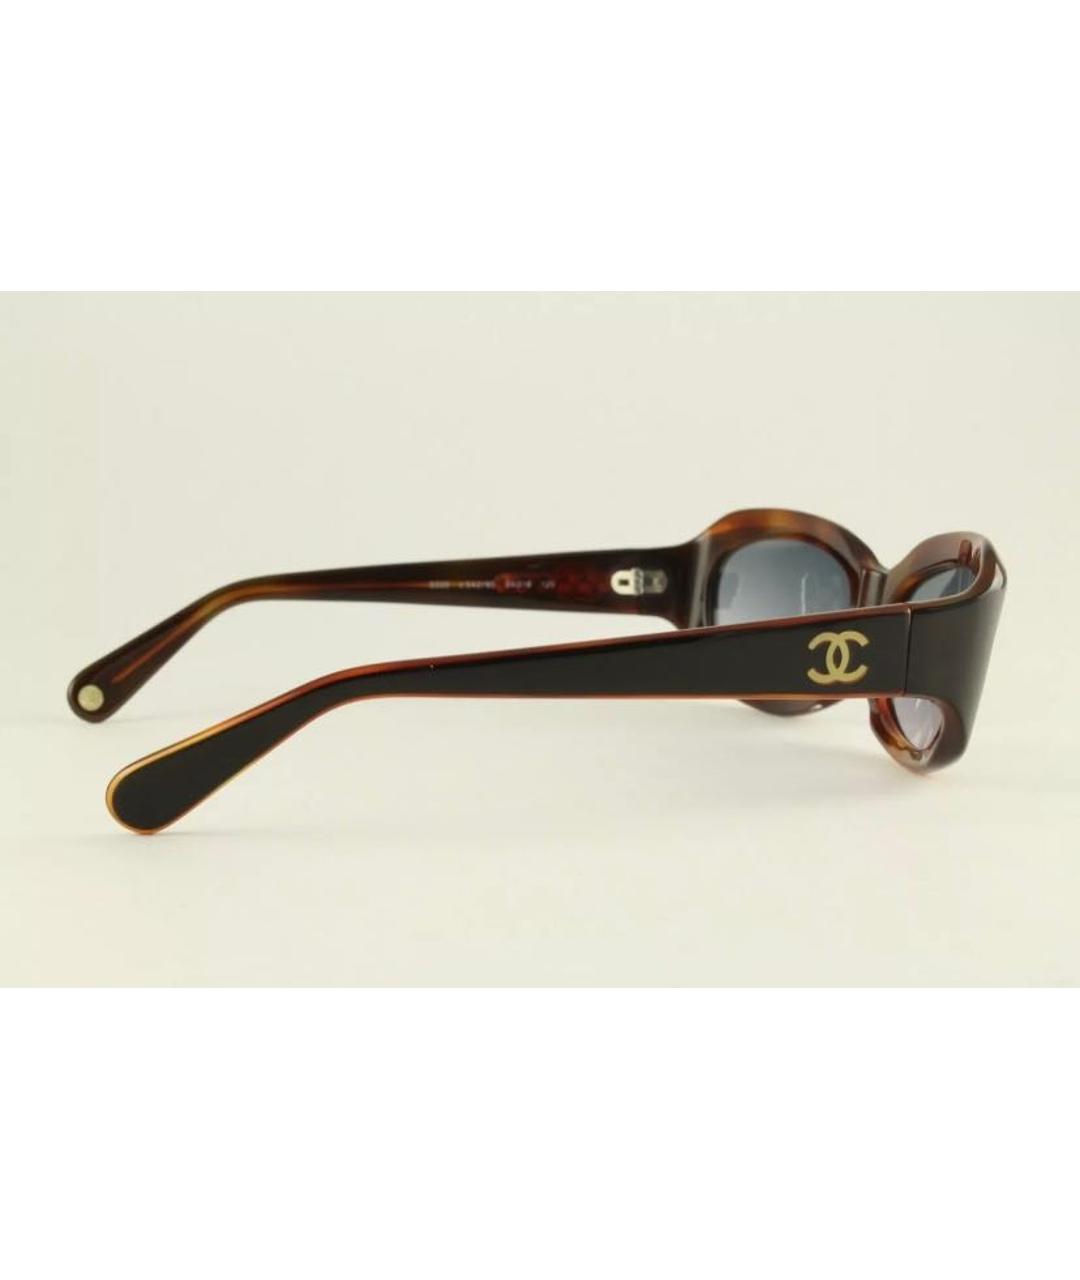 CHANEL PRE-OWNED Коричневые пластиковые солнцезащитные очки, фото 3